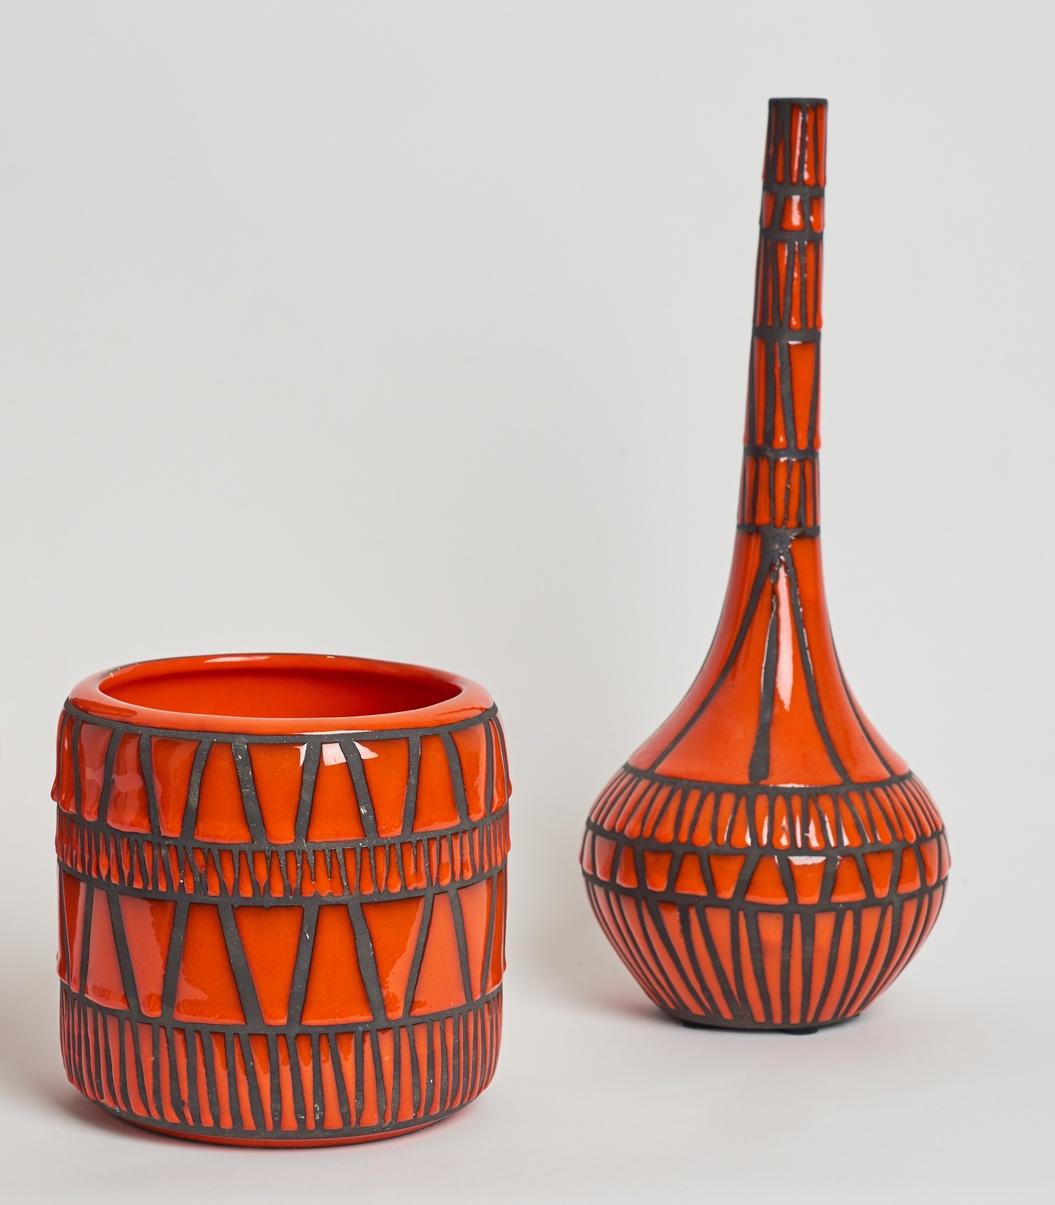 European Ceramic Shiny Red Enamel Vase Signed by Roger Capron, Vallauris, 1950s